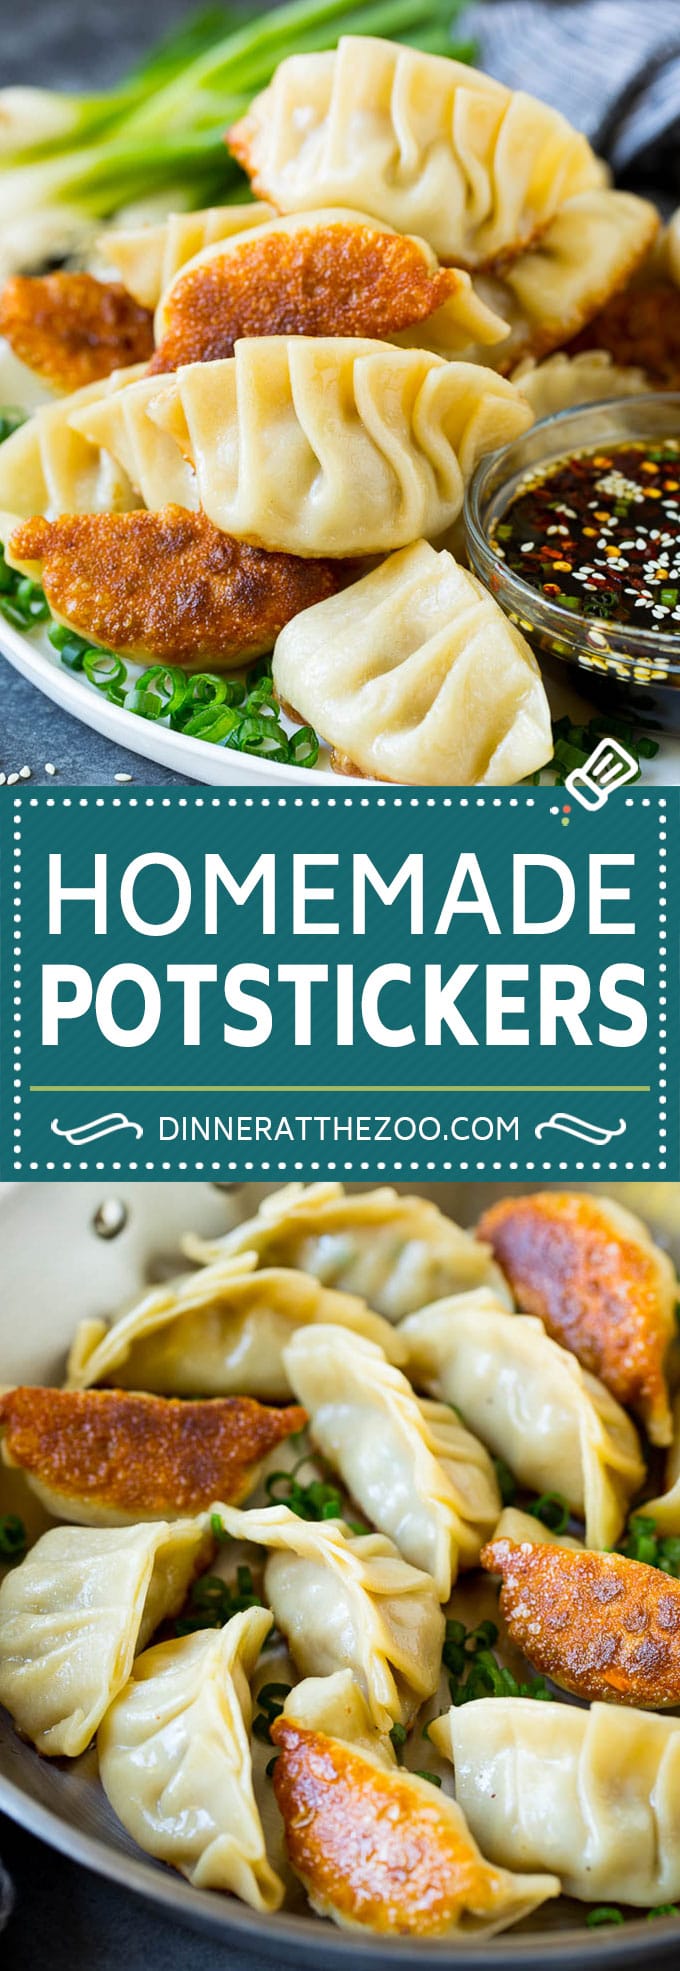 Potstickers Recipe | Dumpling Recipe #potstickers #dumpling #appetizer #pork #dinner #dinneratthezoo